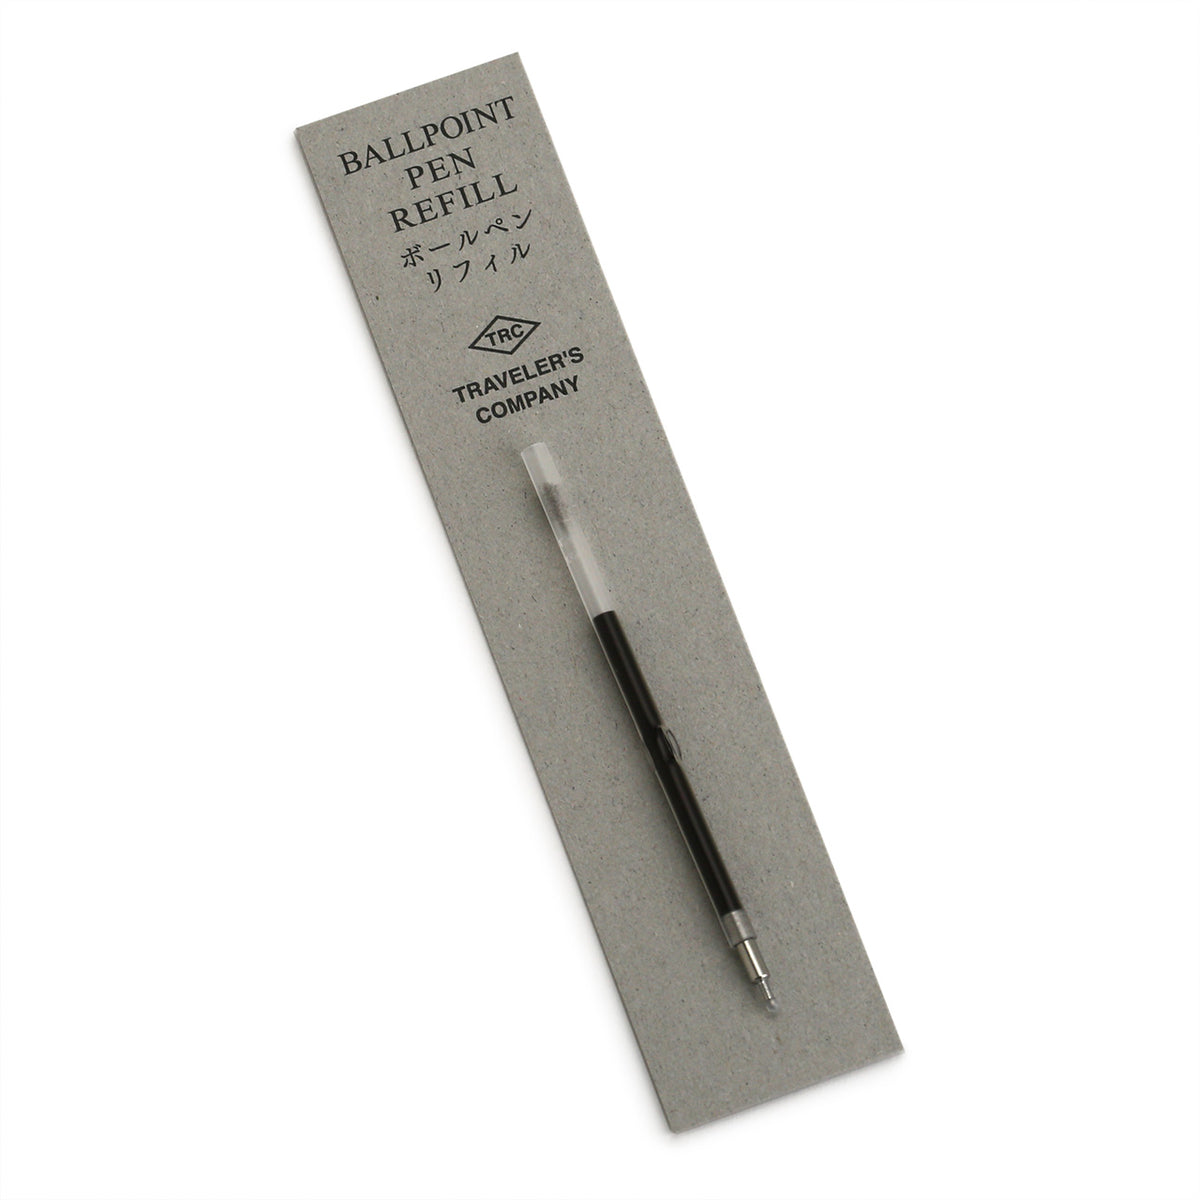 Traveeeler&#39;scompany ballpoint pen refill on its Kraft packaging